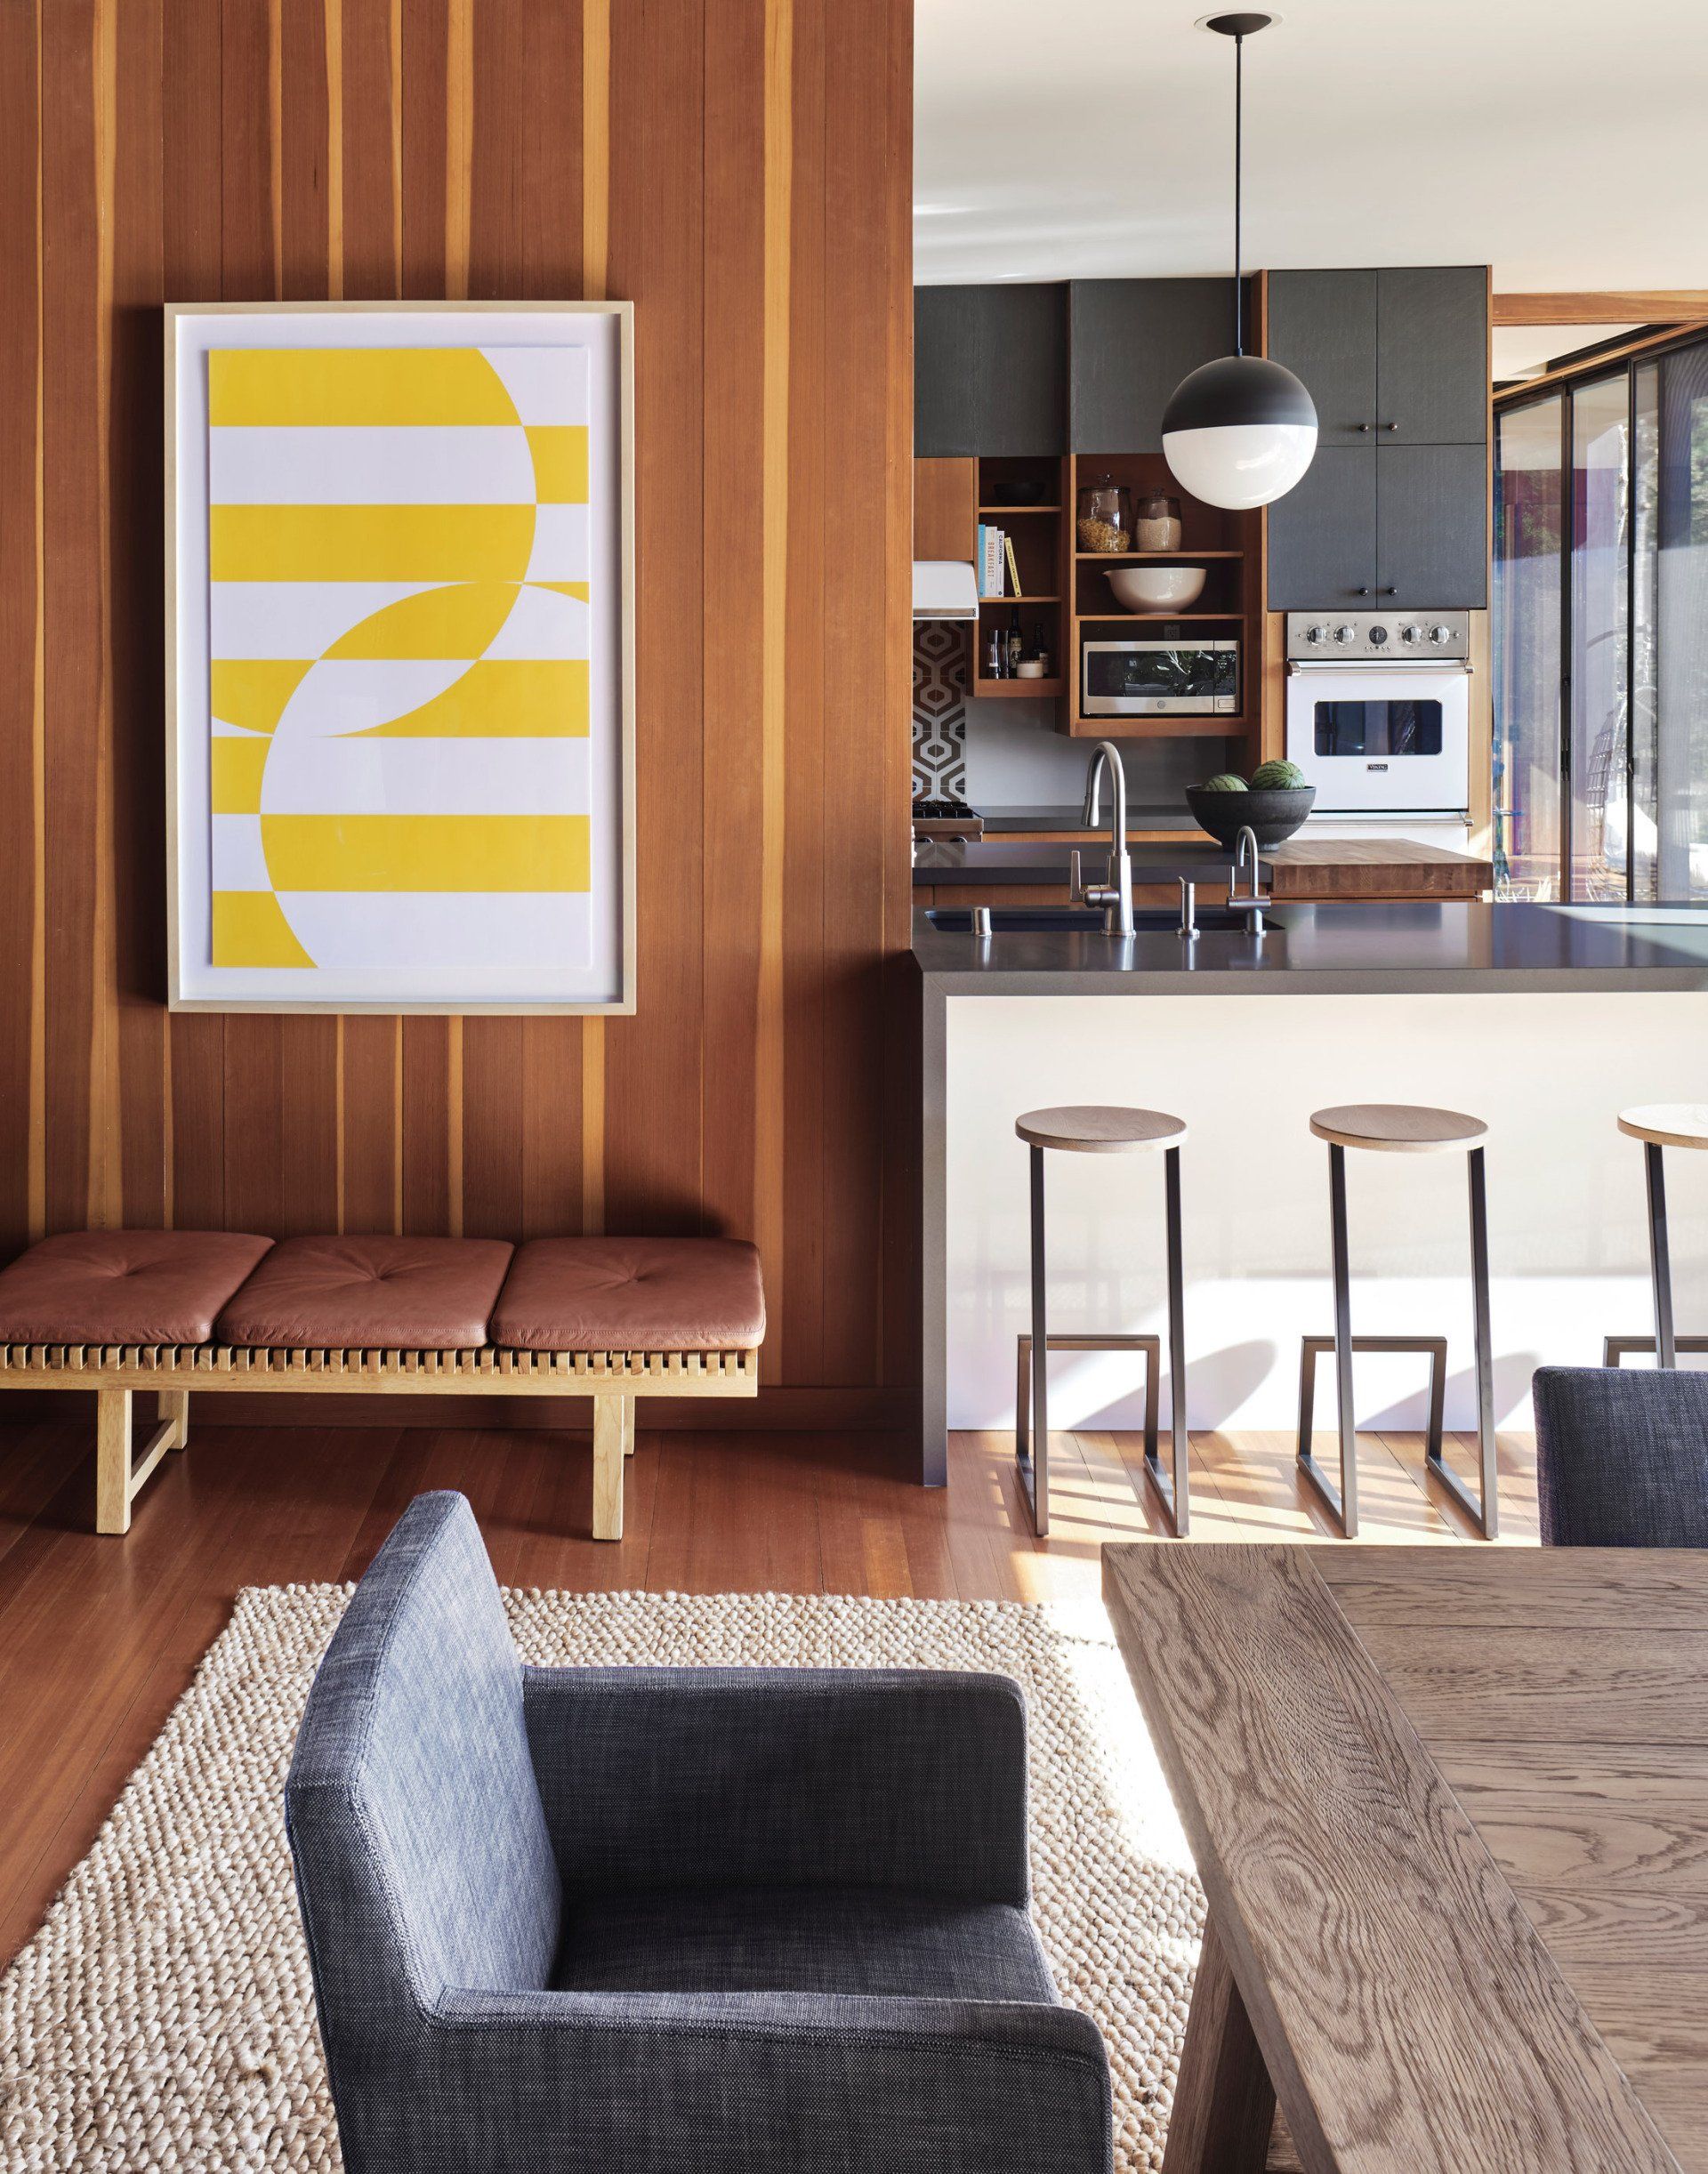 Dining room in a Home in Northern California designed by Dakota DesignWorks